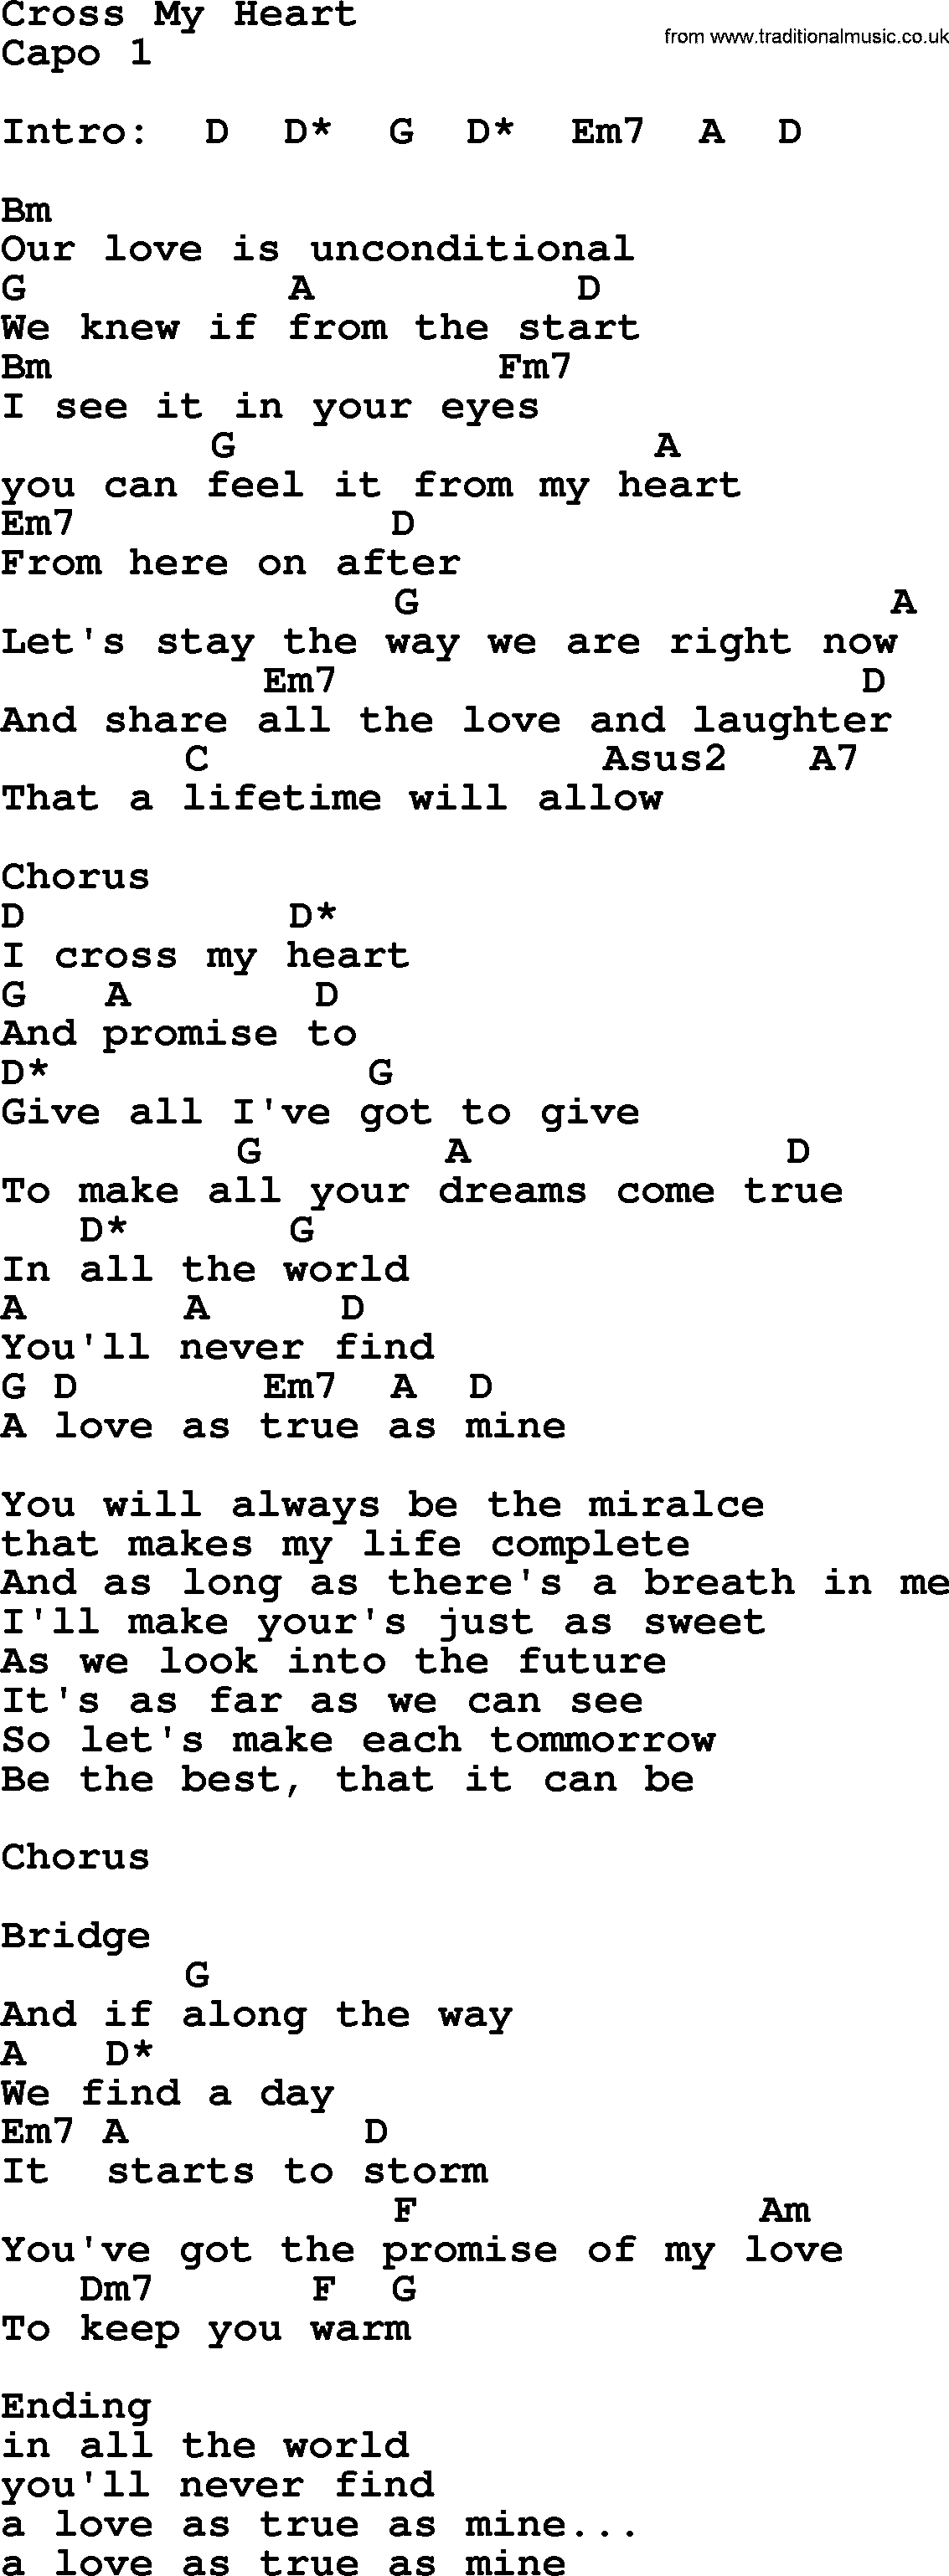 George Strait song: Cross My Heart, lyrics and chords